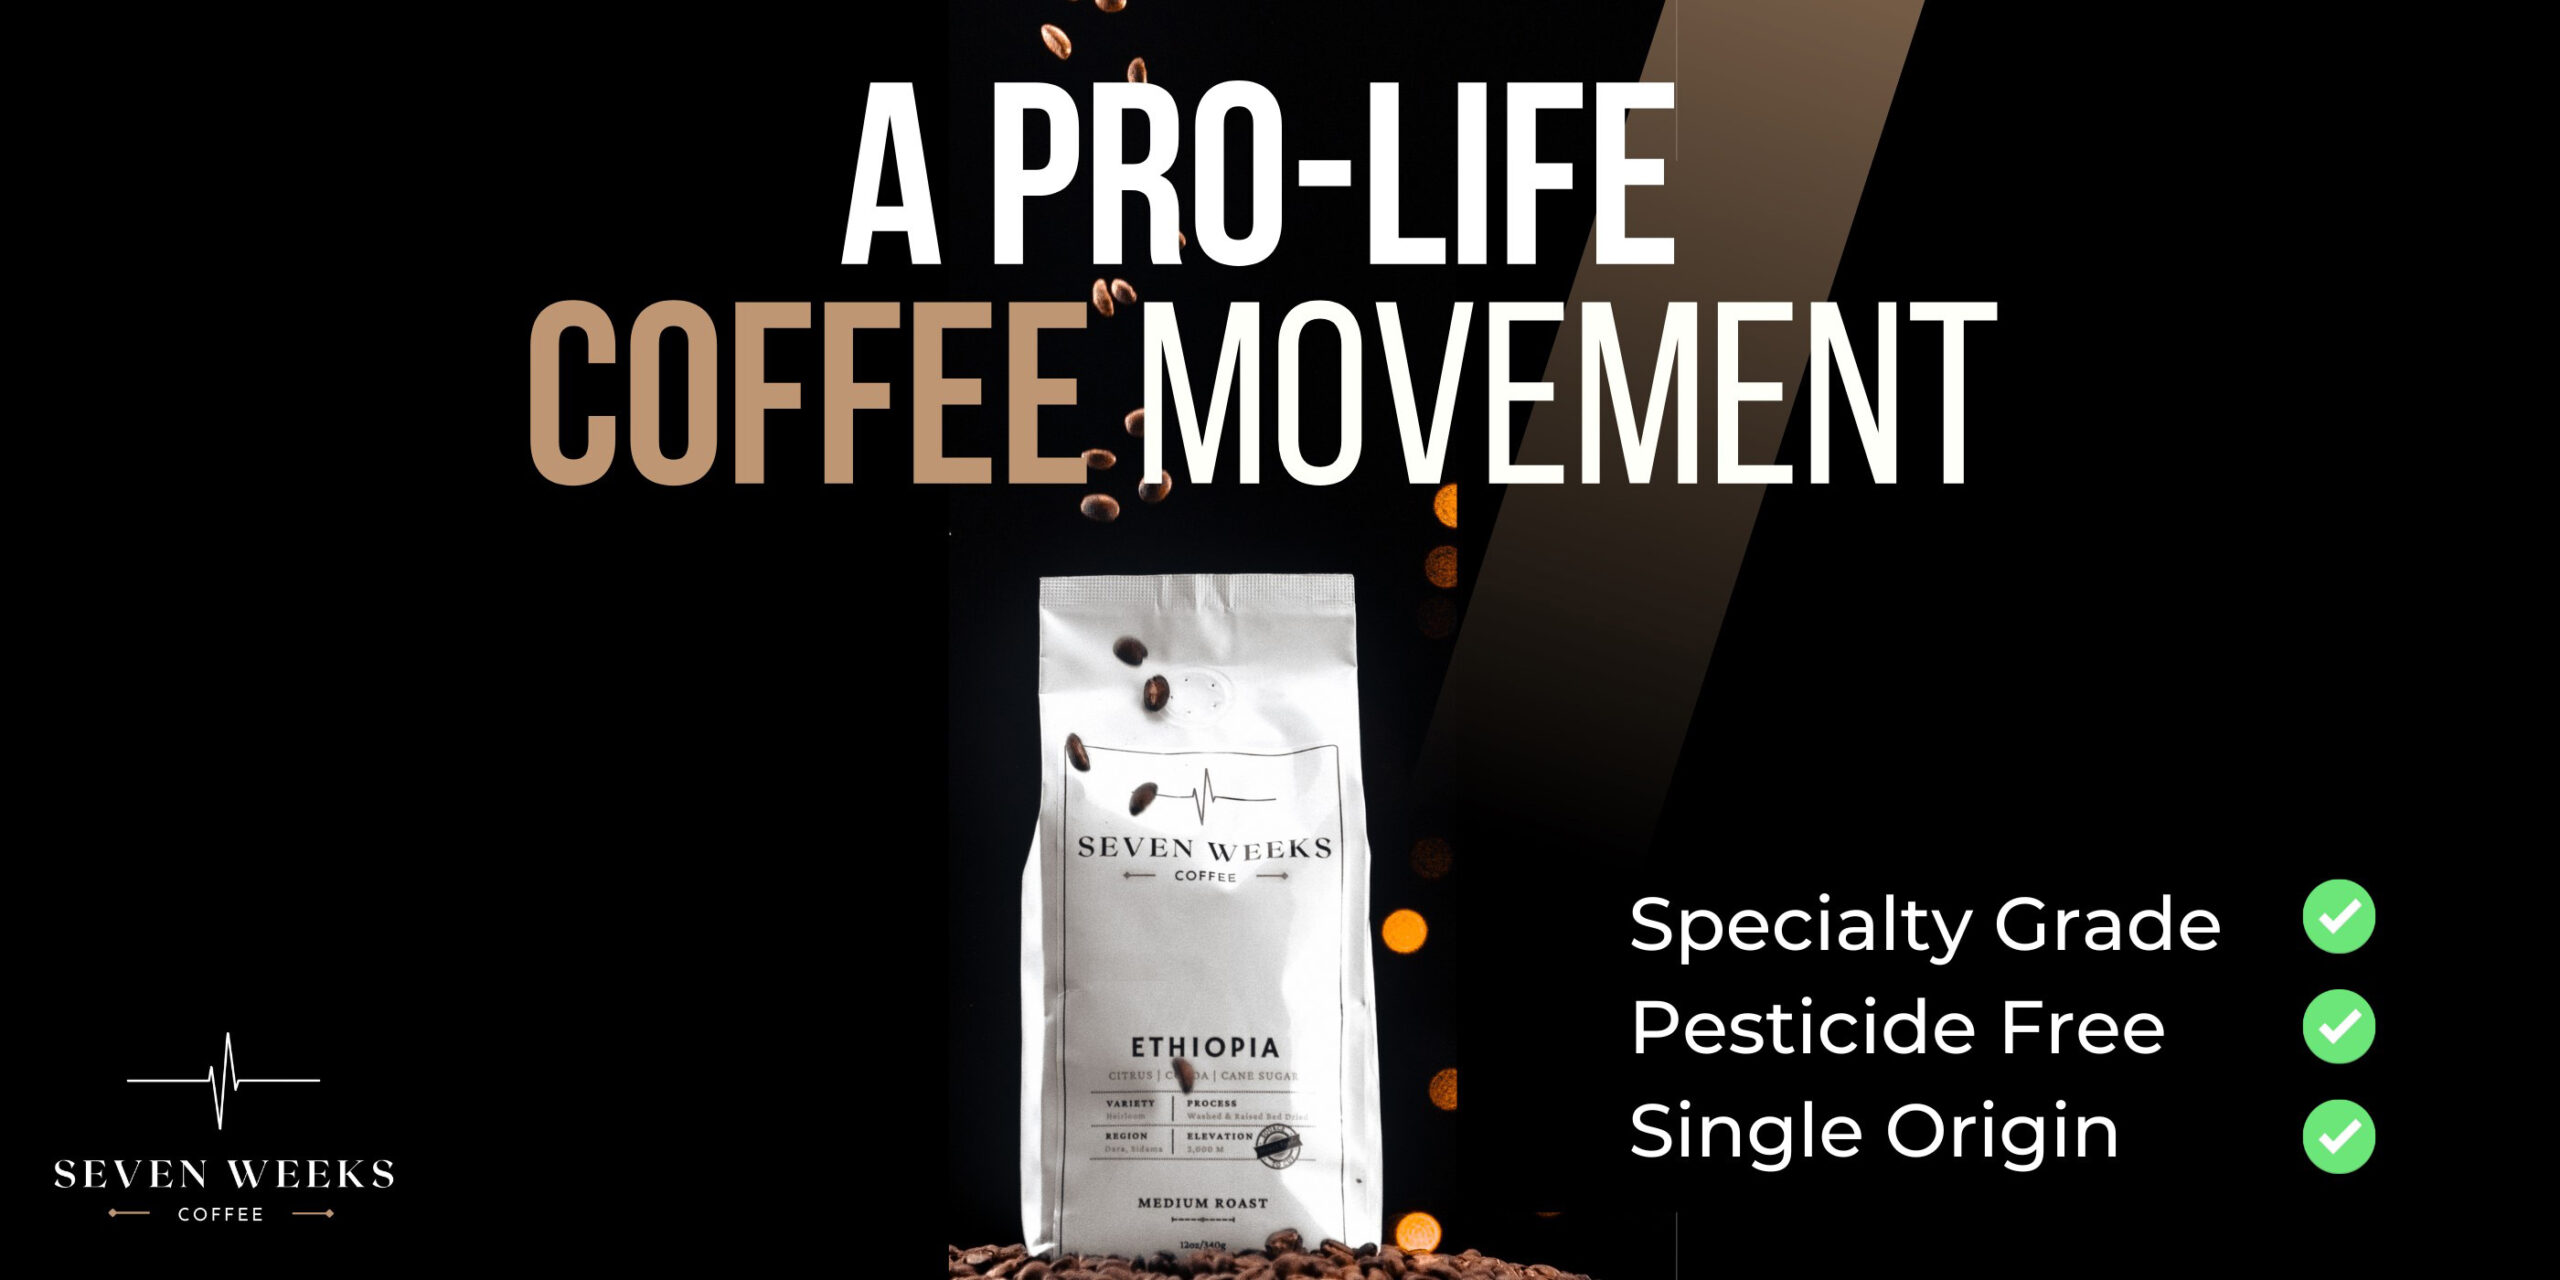 Shop 7 Weeks Coffee--the Pro-Life Coffee Company!